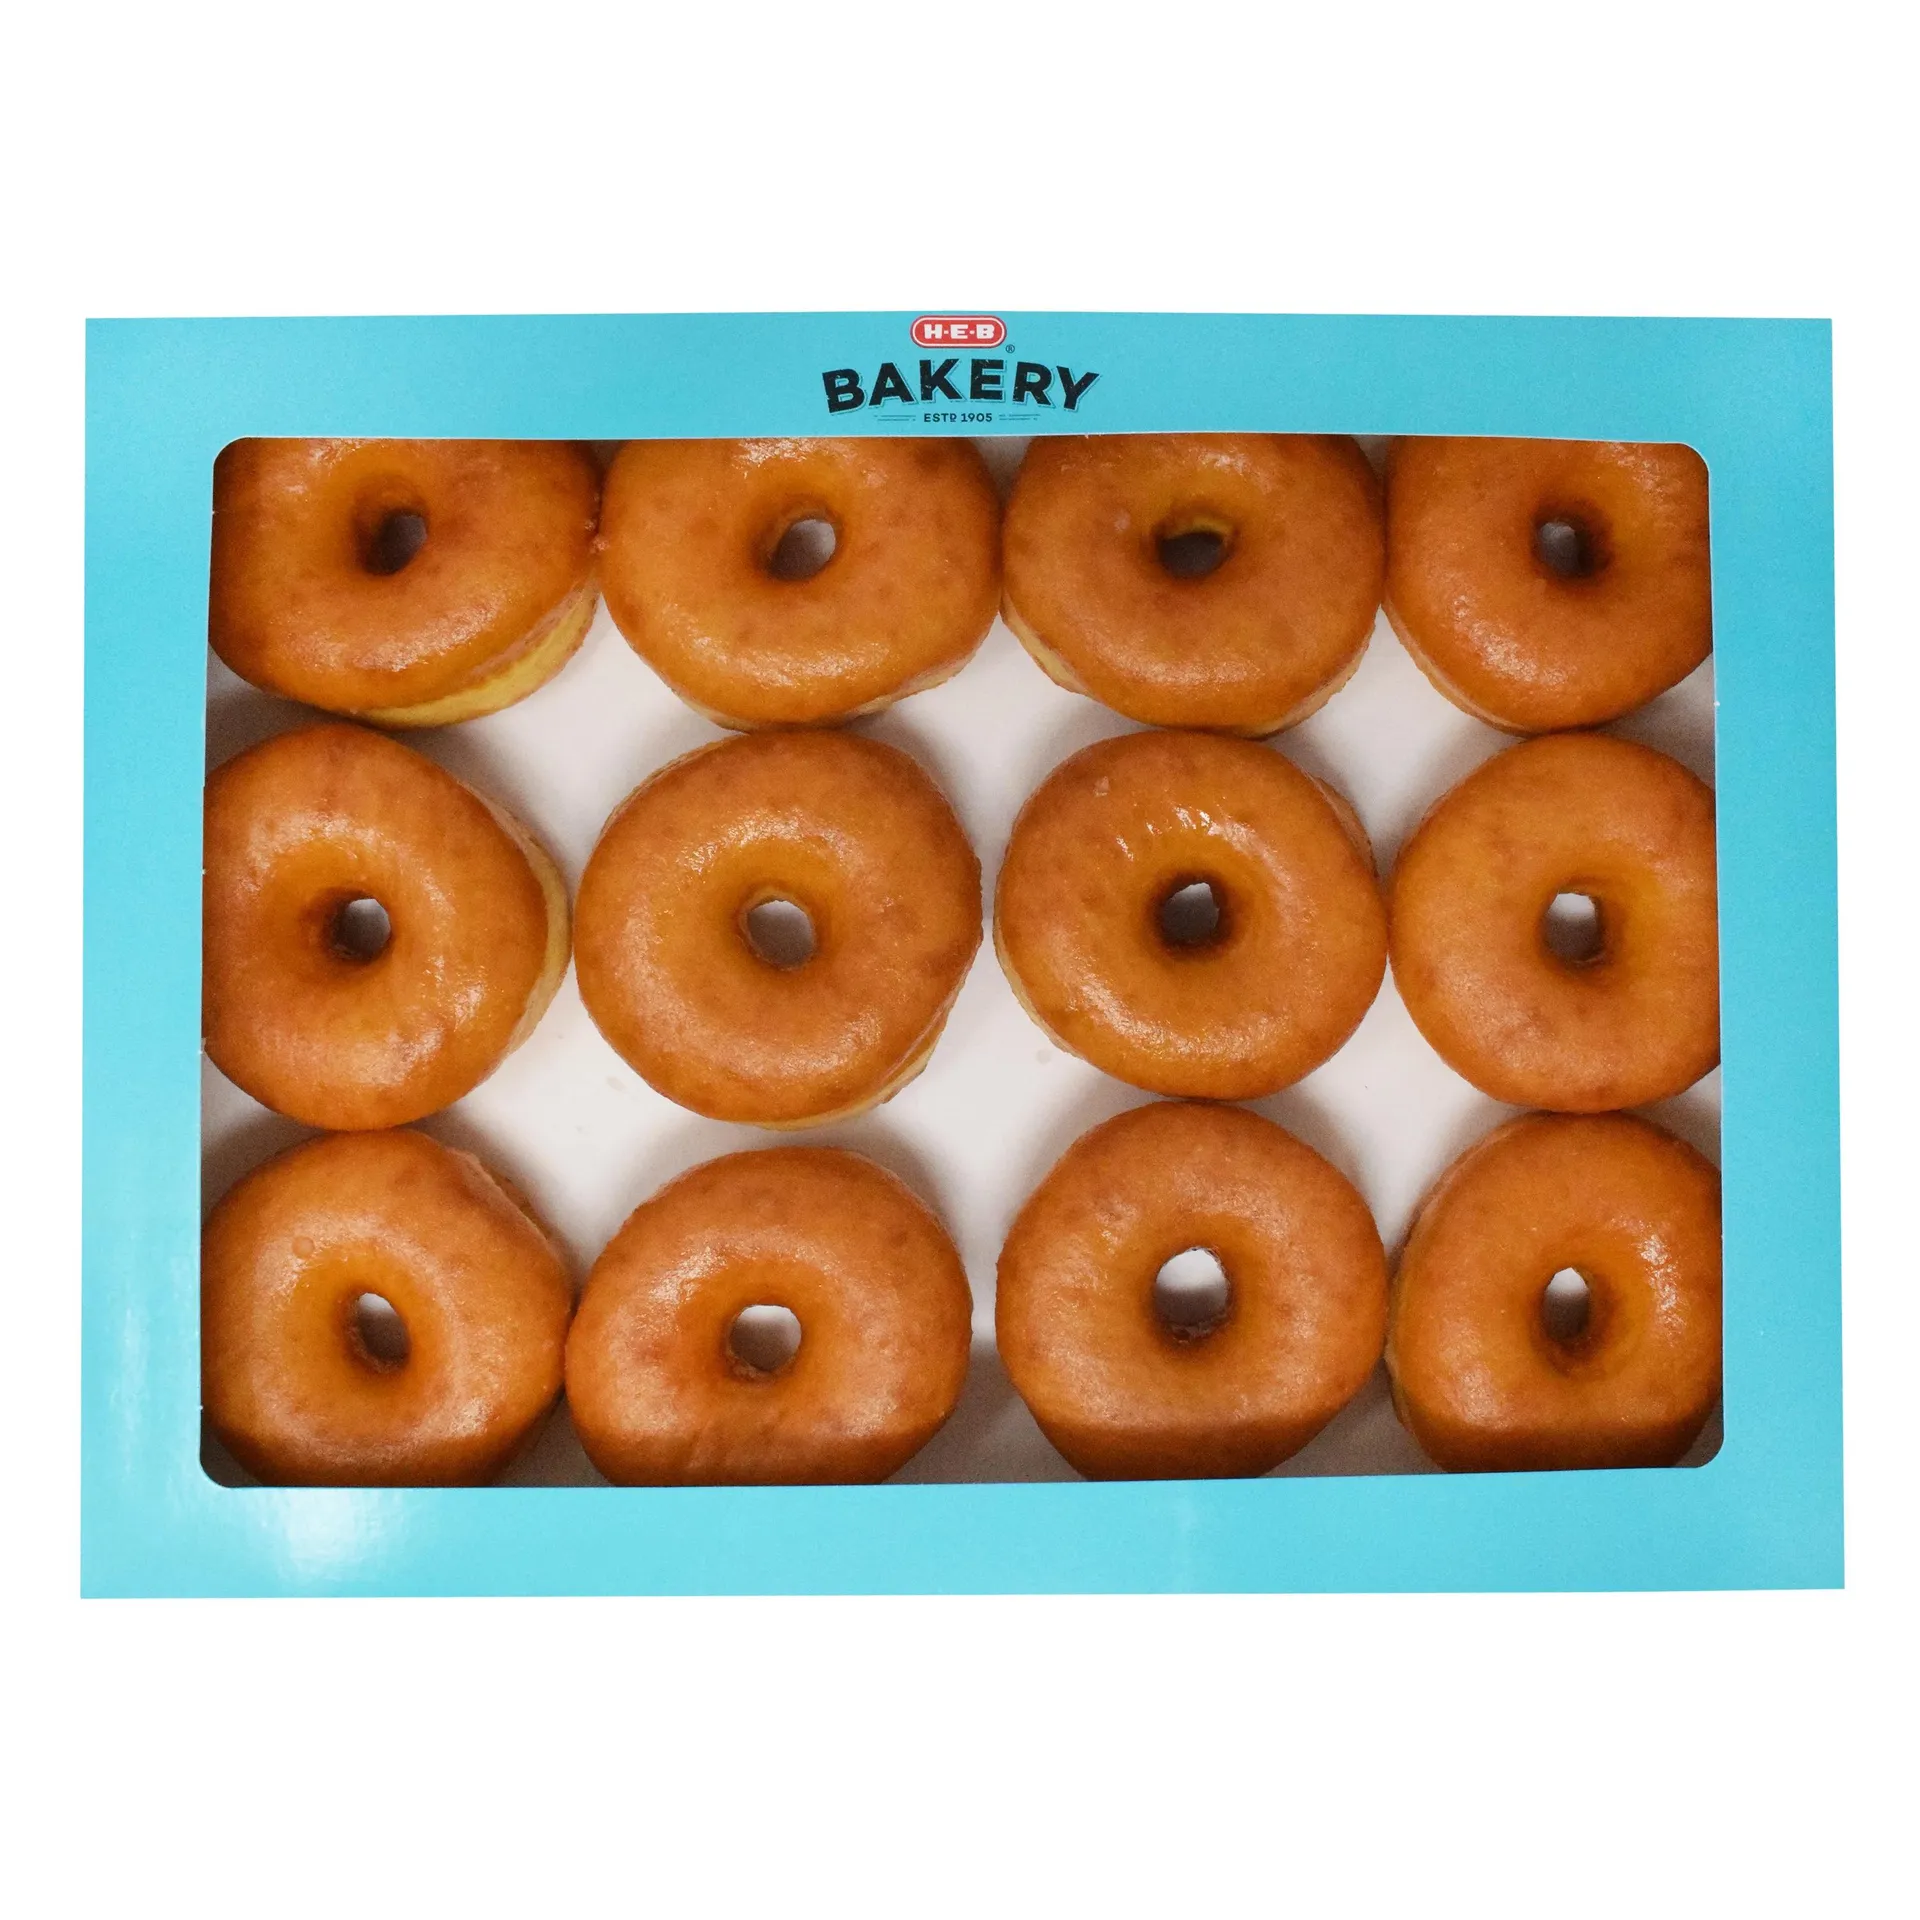 H‑E‑B Bakery Glazed Donuts